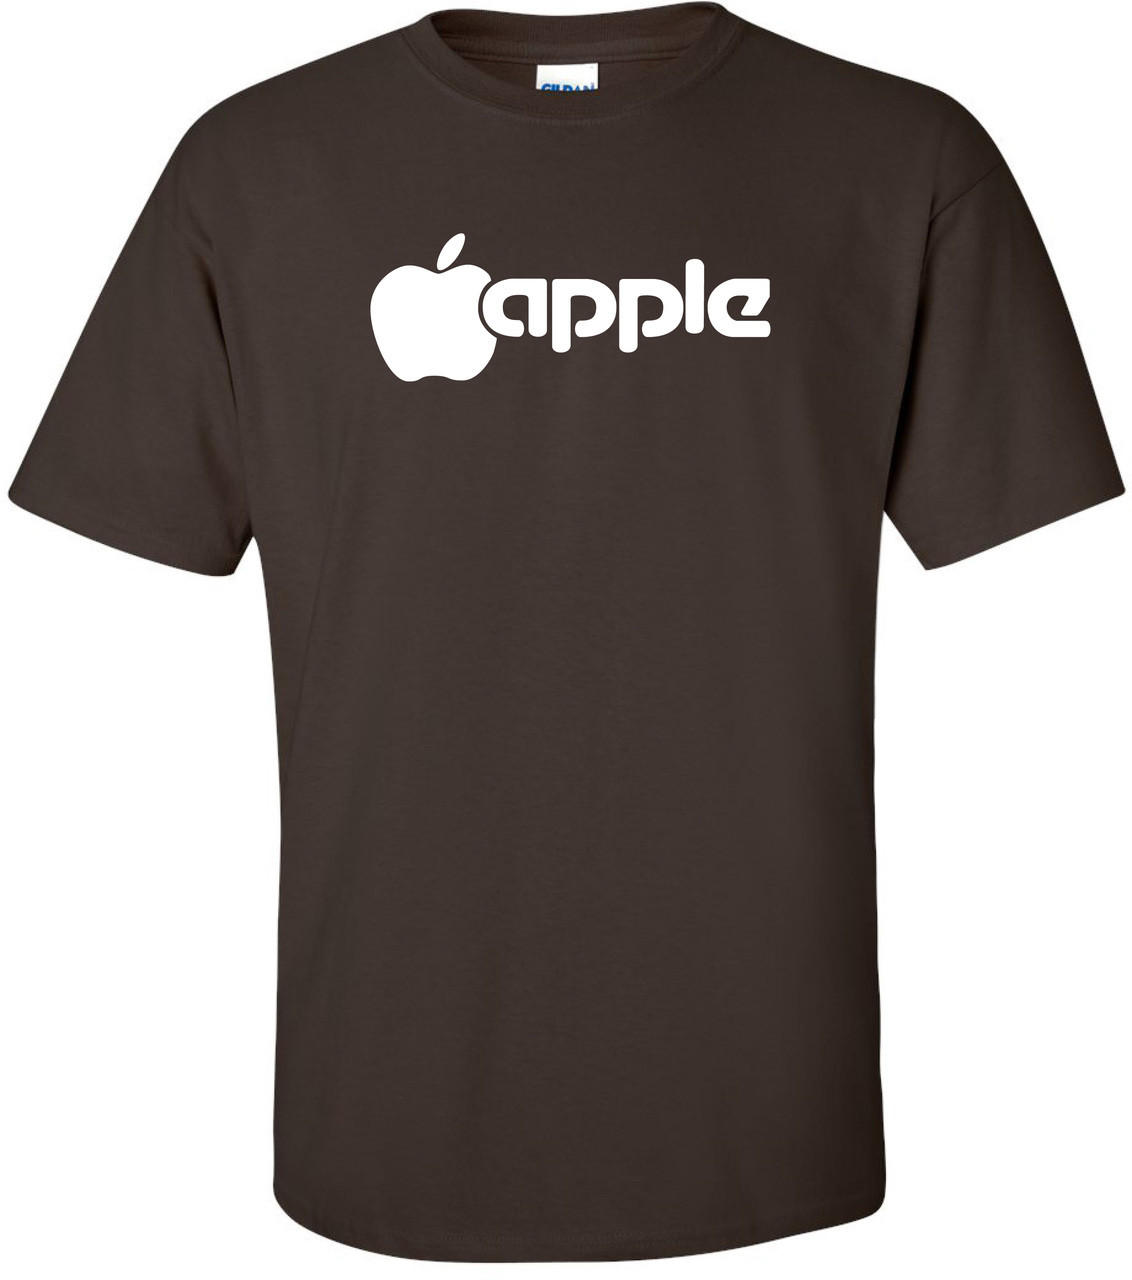 Apple Computer Vintage Apple II Era T-shirt - Brown - Interspace180